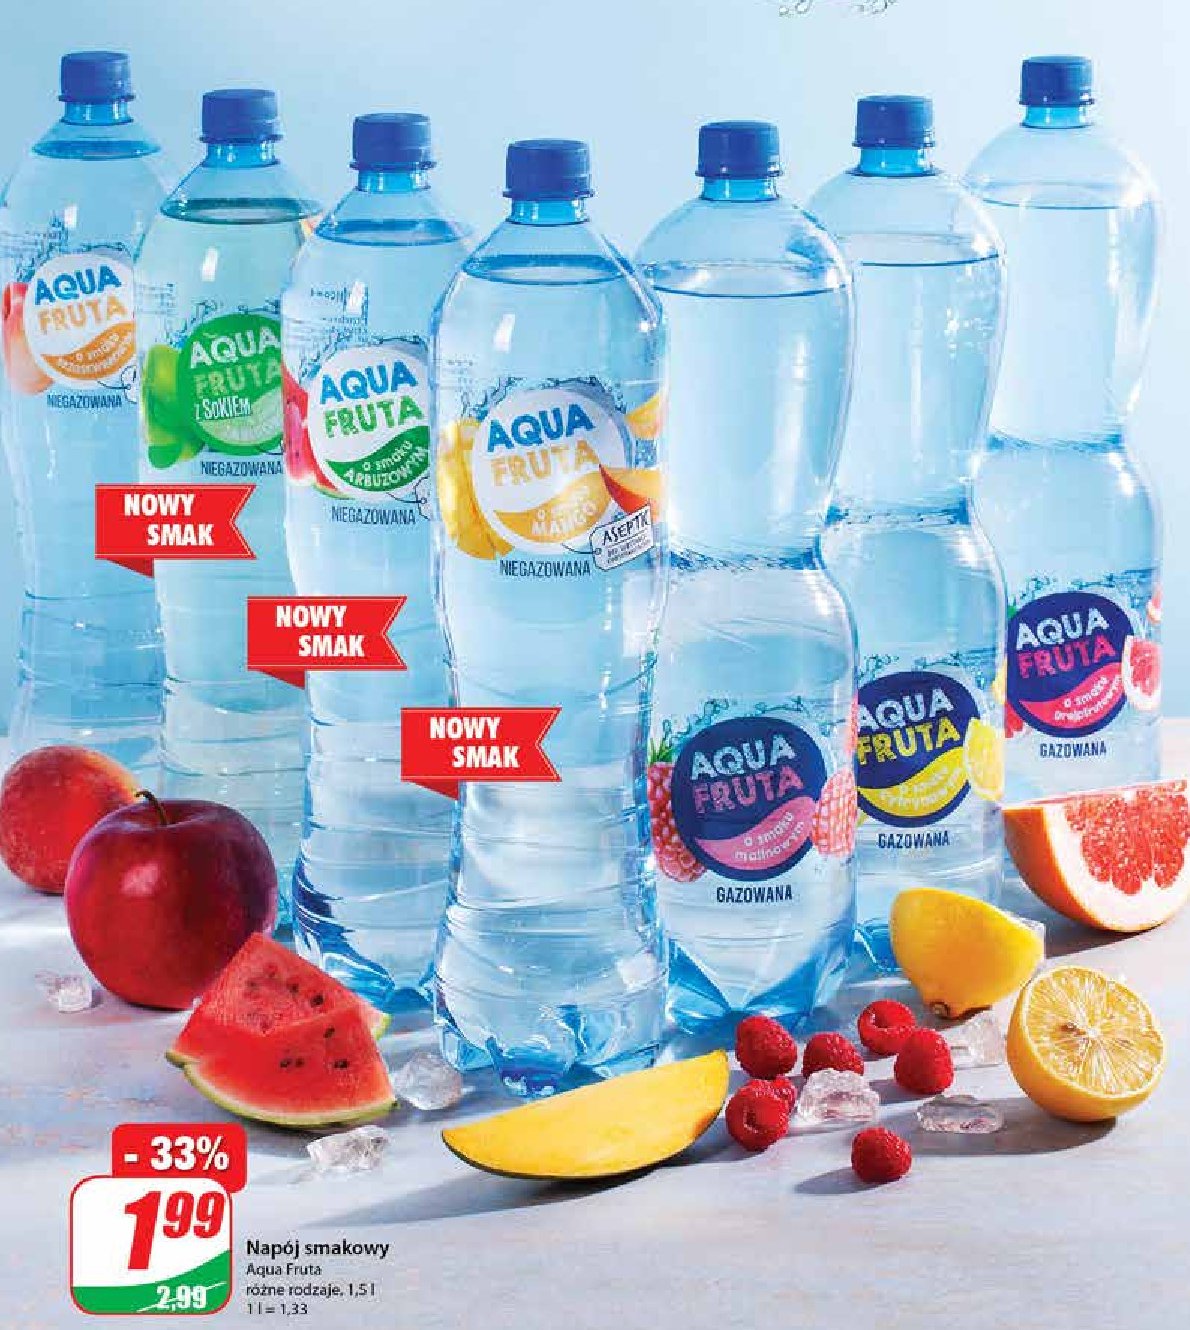 Woda malinowa Aqua fruta promocje